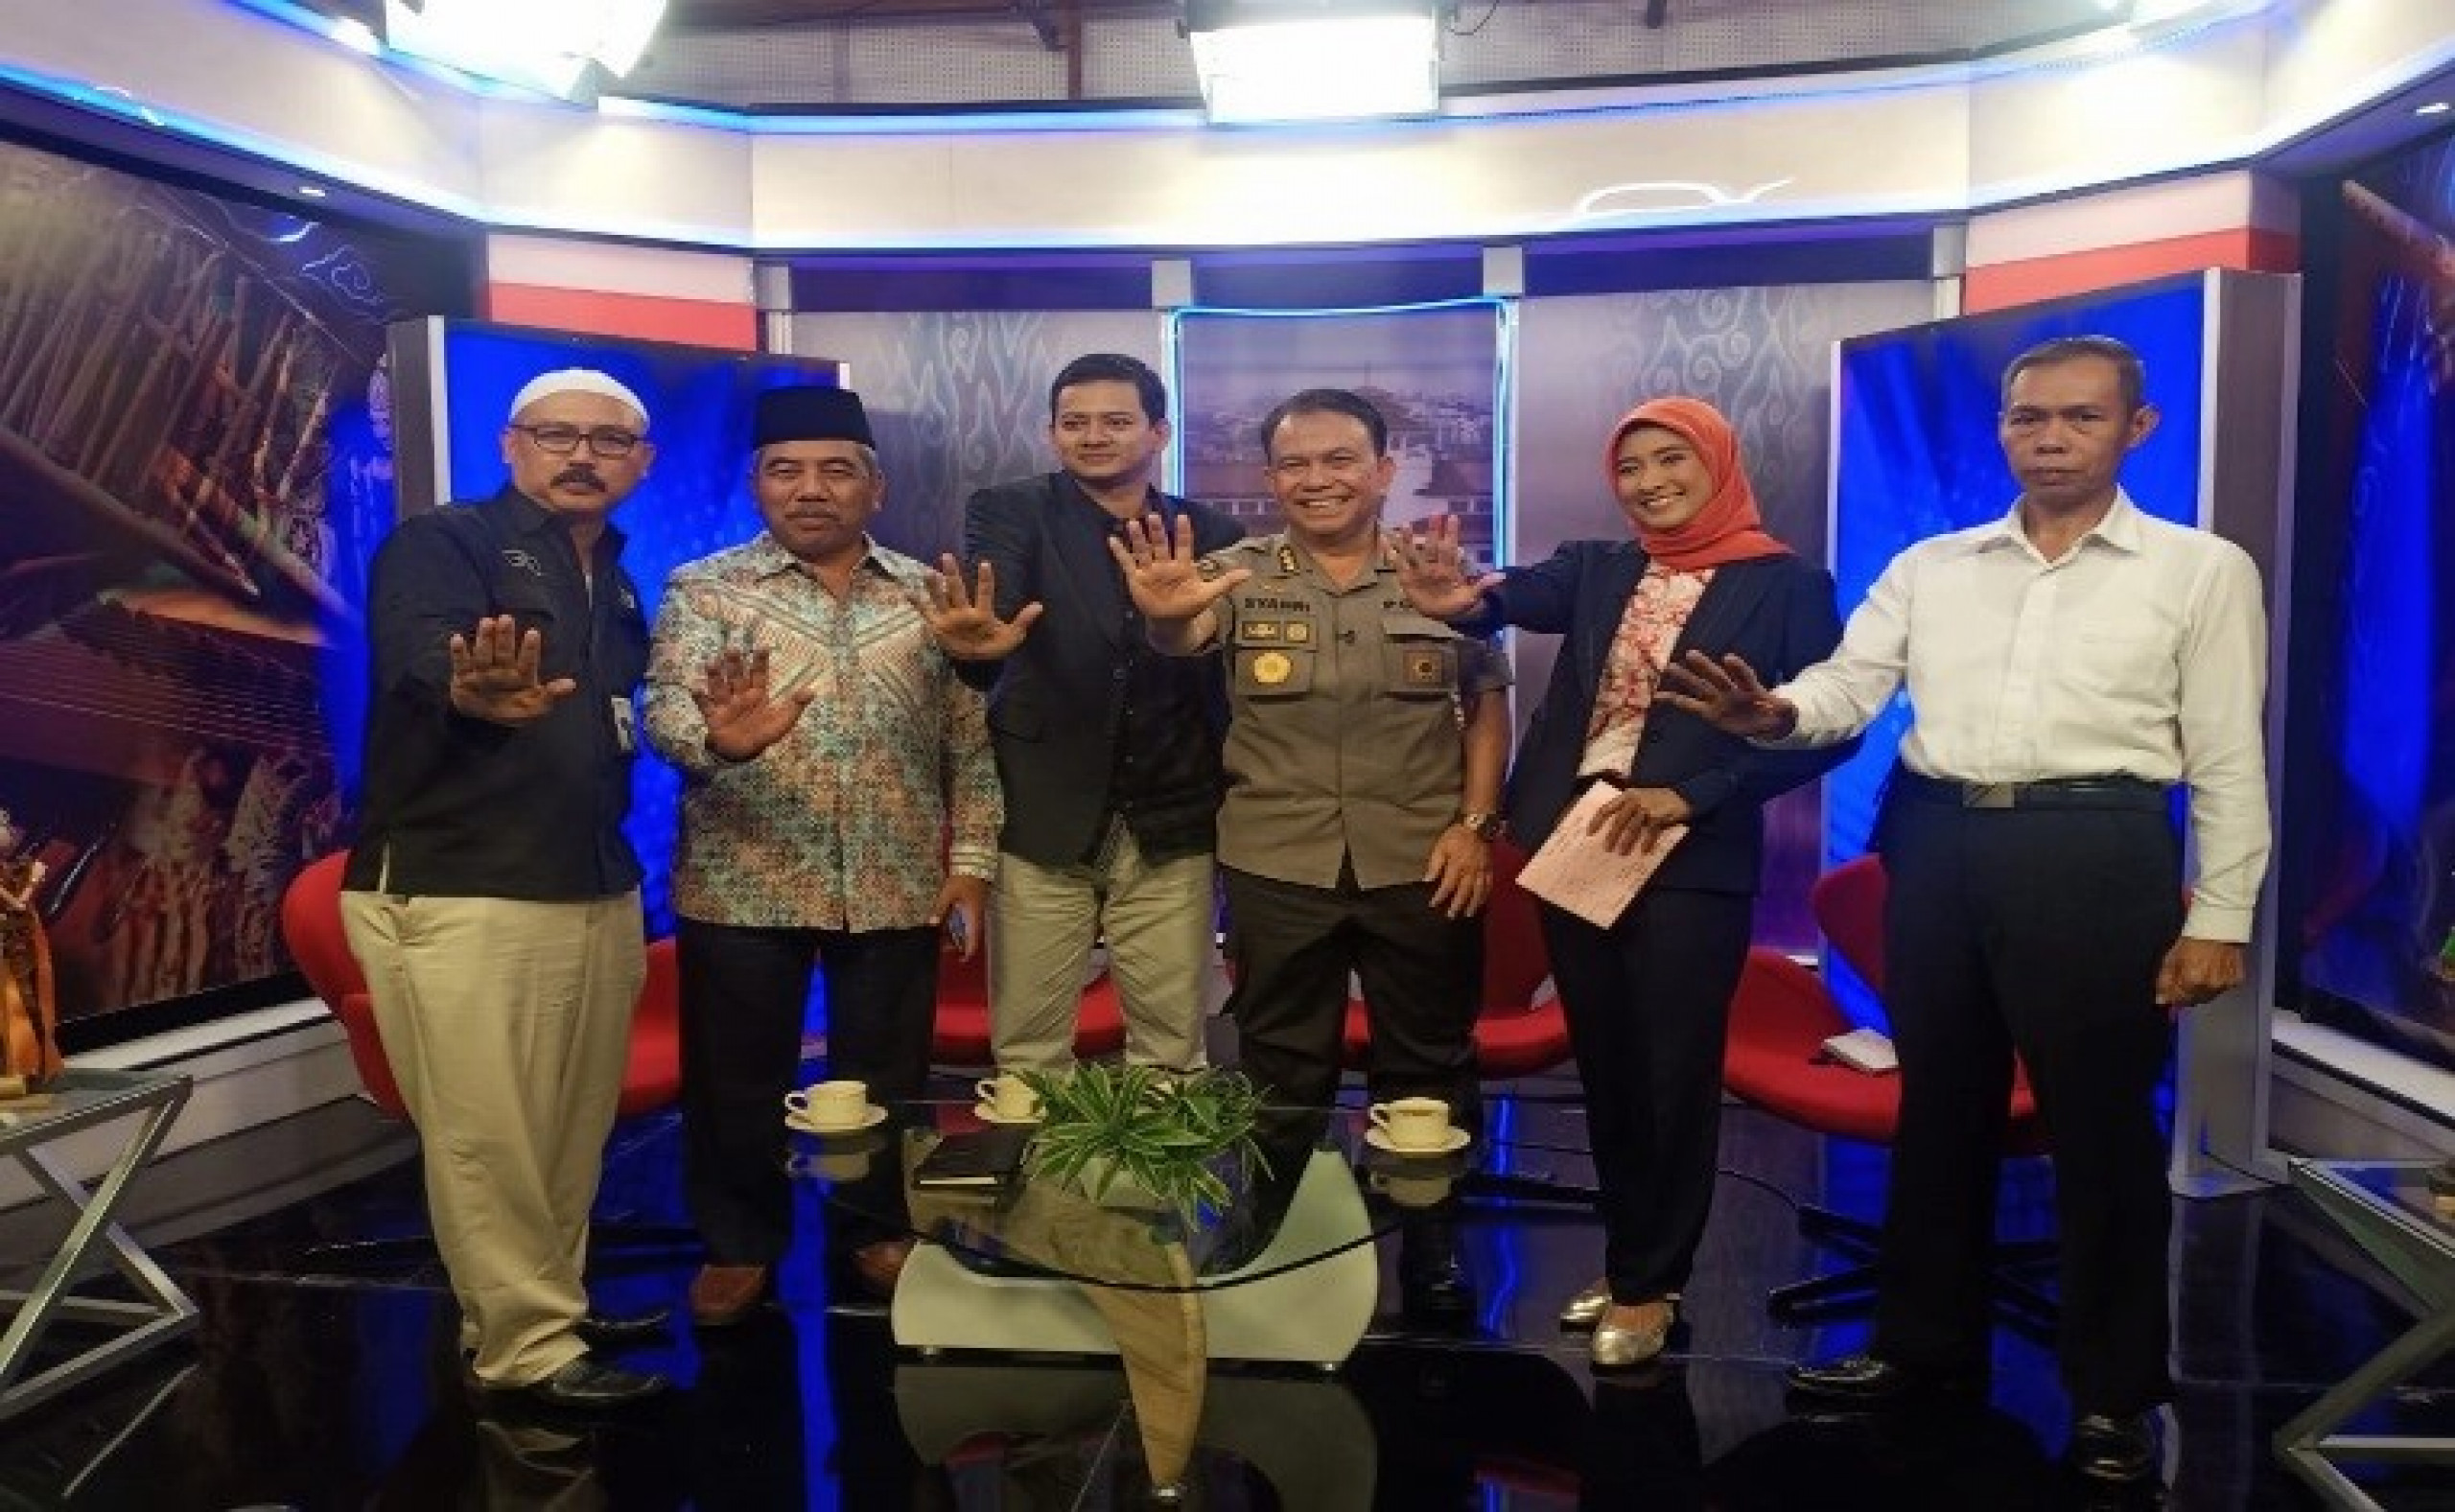 saberpungli jabar - Dialog Forum Publik TVRI Jawa Barat, "Masih Maraknya Pungli di Sekolah Kab. Bandung"